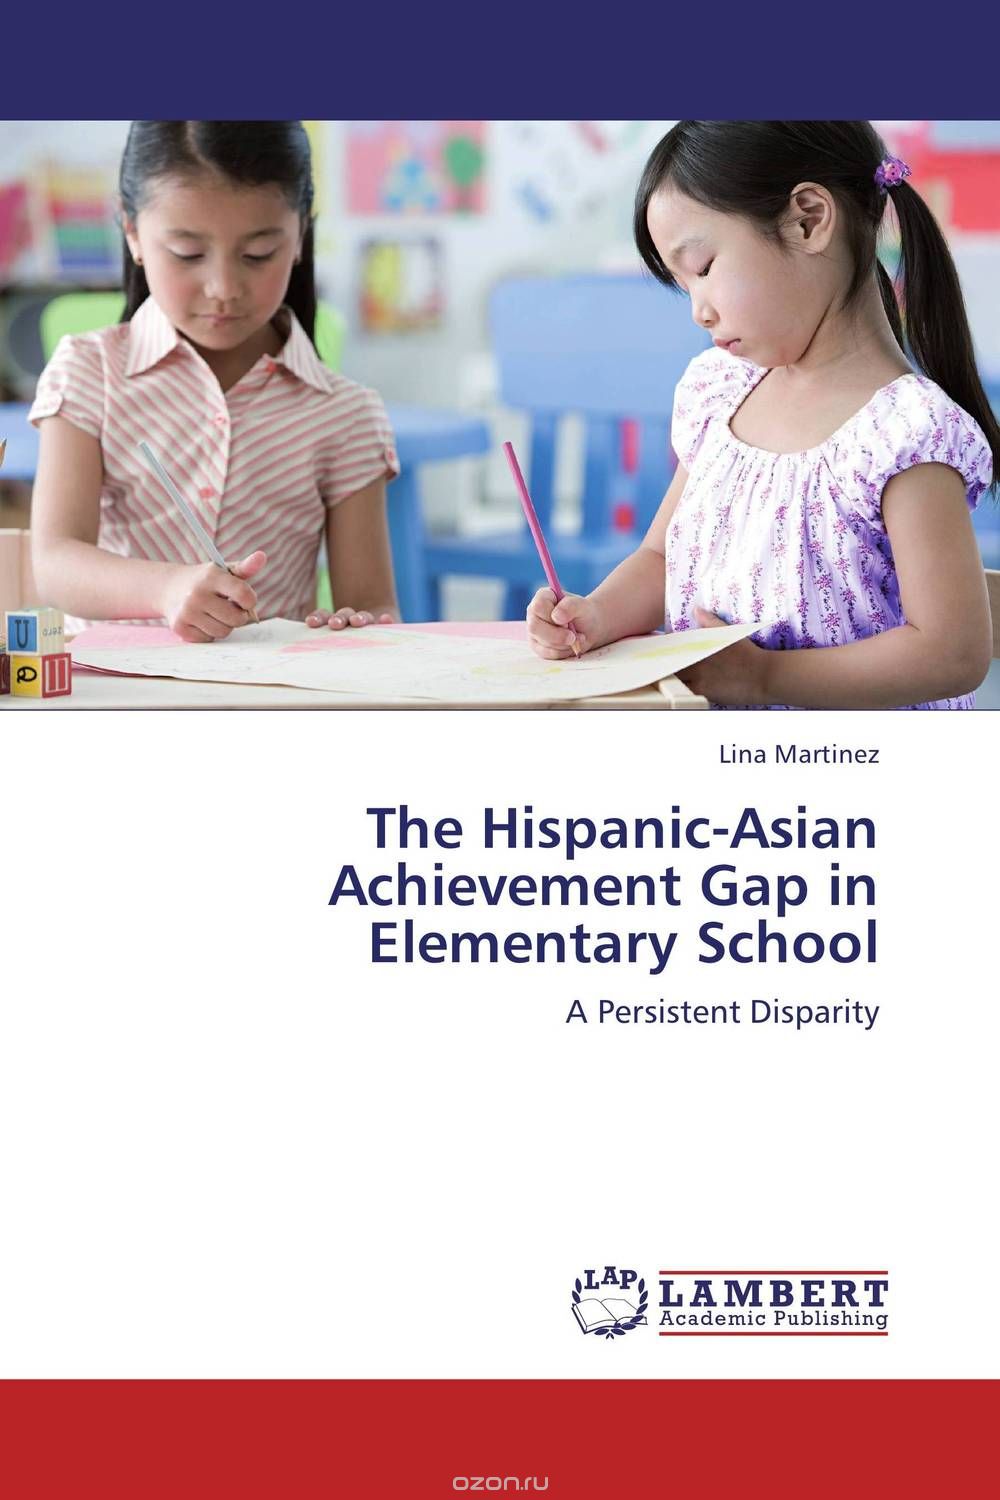 Скачать книгу "The Hispanic-Asian Achievement Gap in Elementary School"